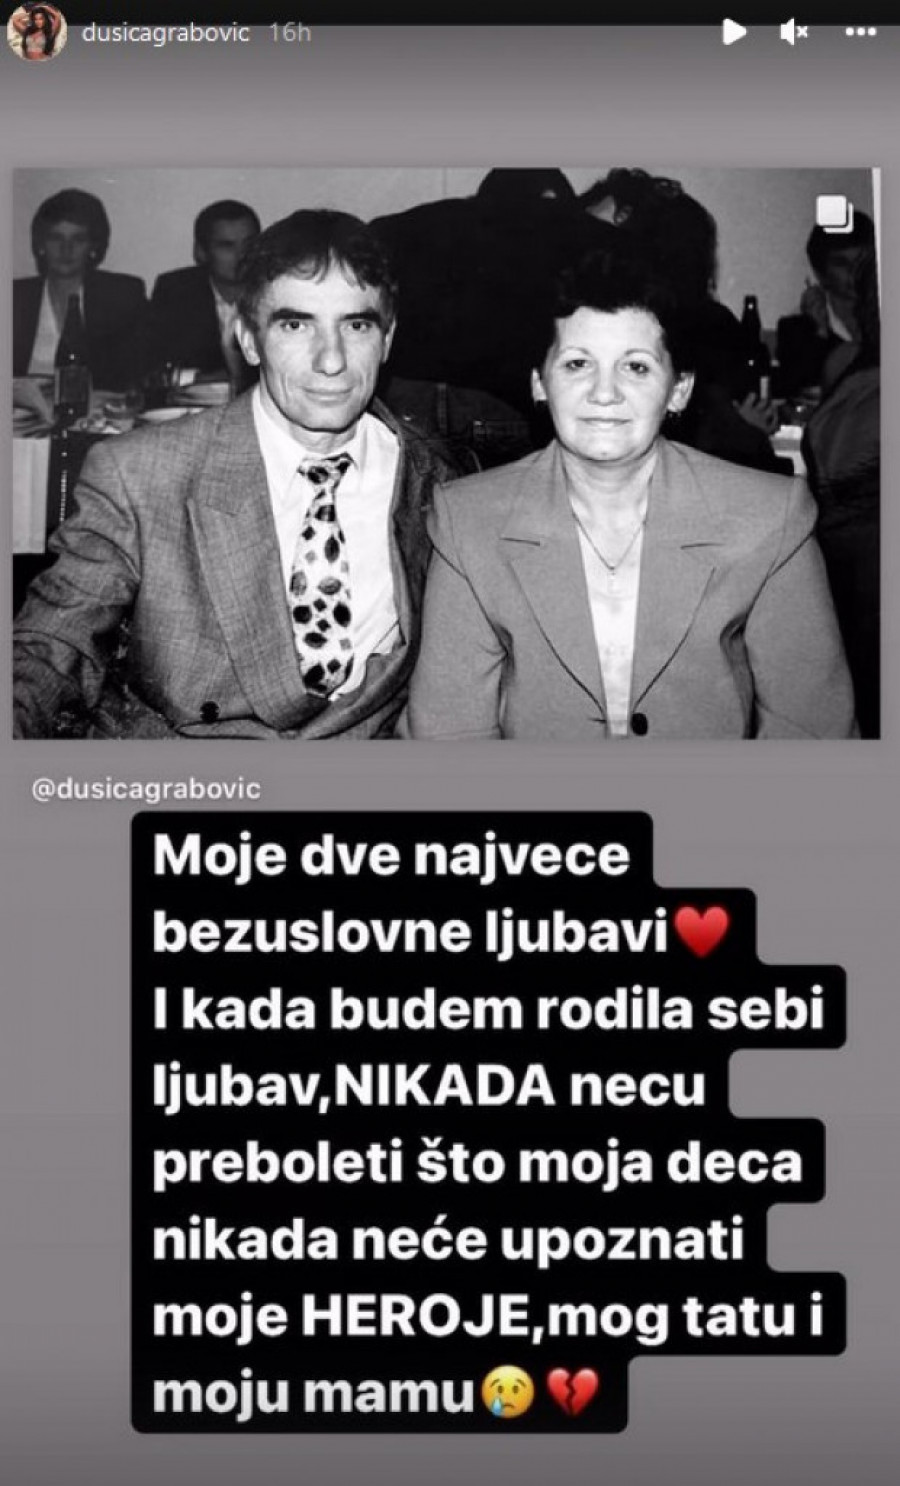 Instagram screenshot / dusicagrabovic